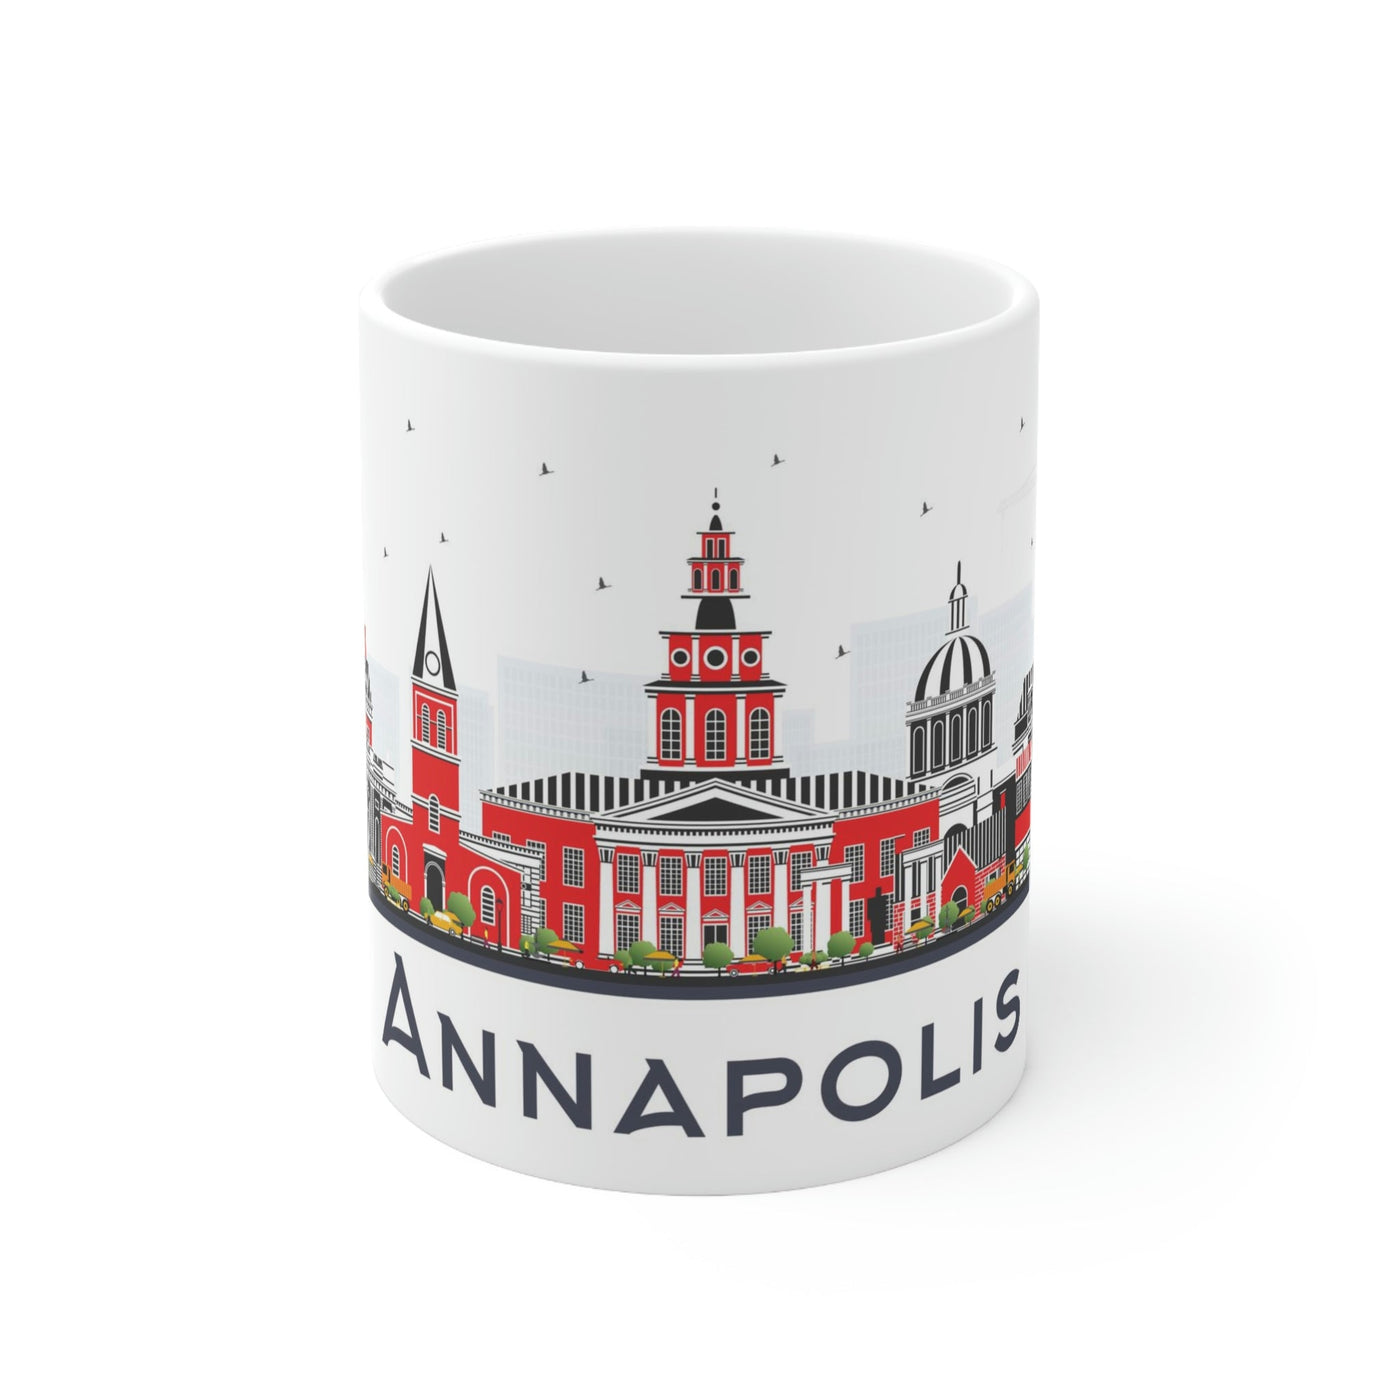 Annapolis Maryland Coffee Mug - Ezra's Clothing